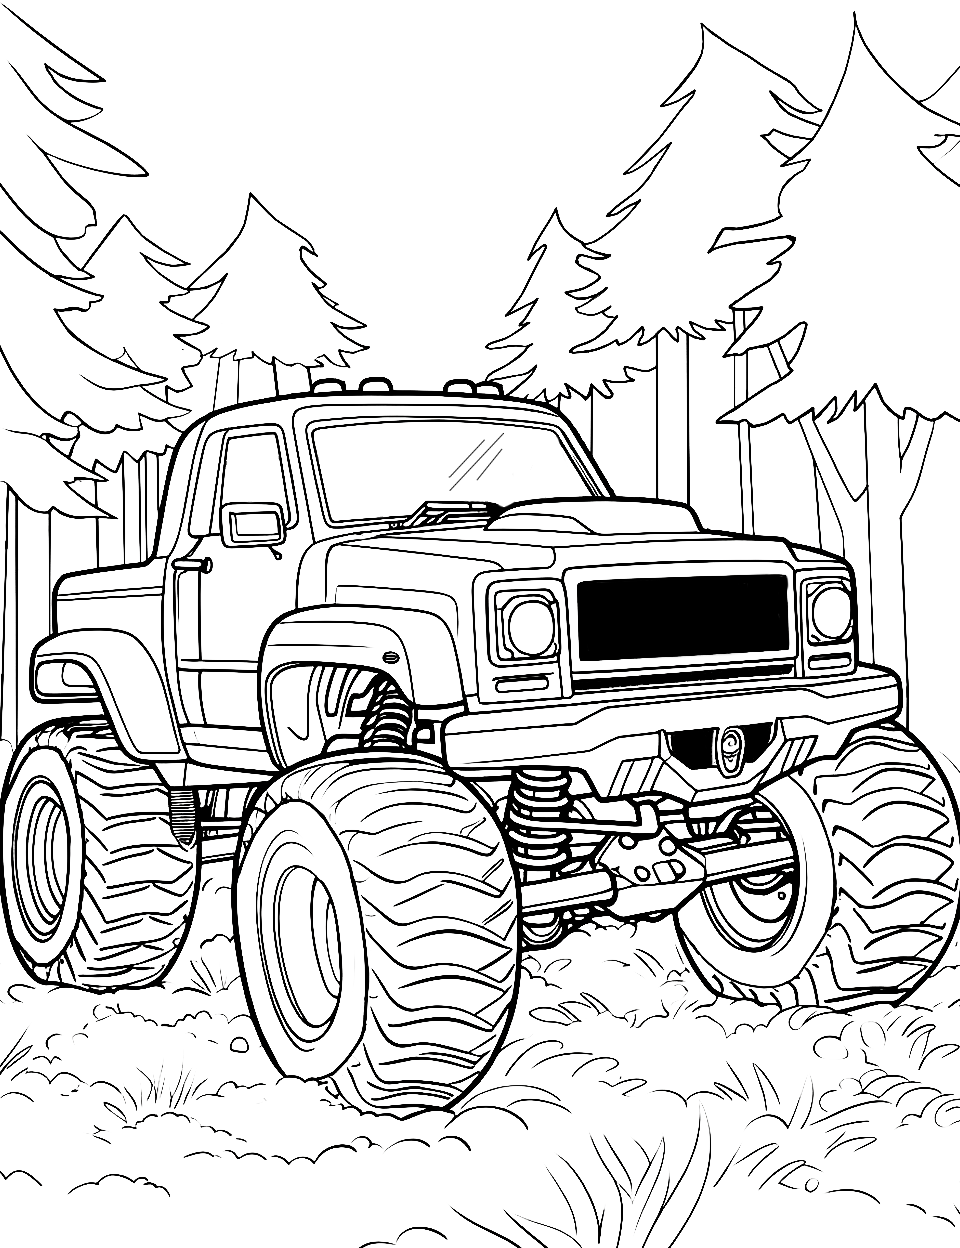 Rainforest Rumble Monster Truck Coloring Page - Monster trucks navigating through a dense tropical rainforest.